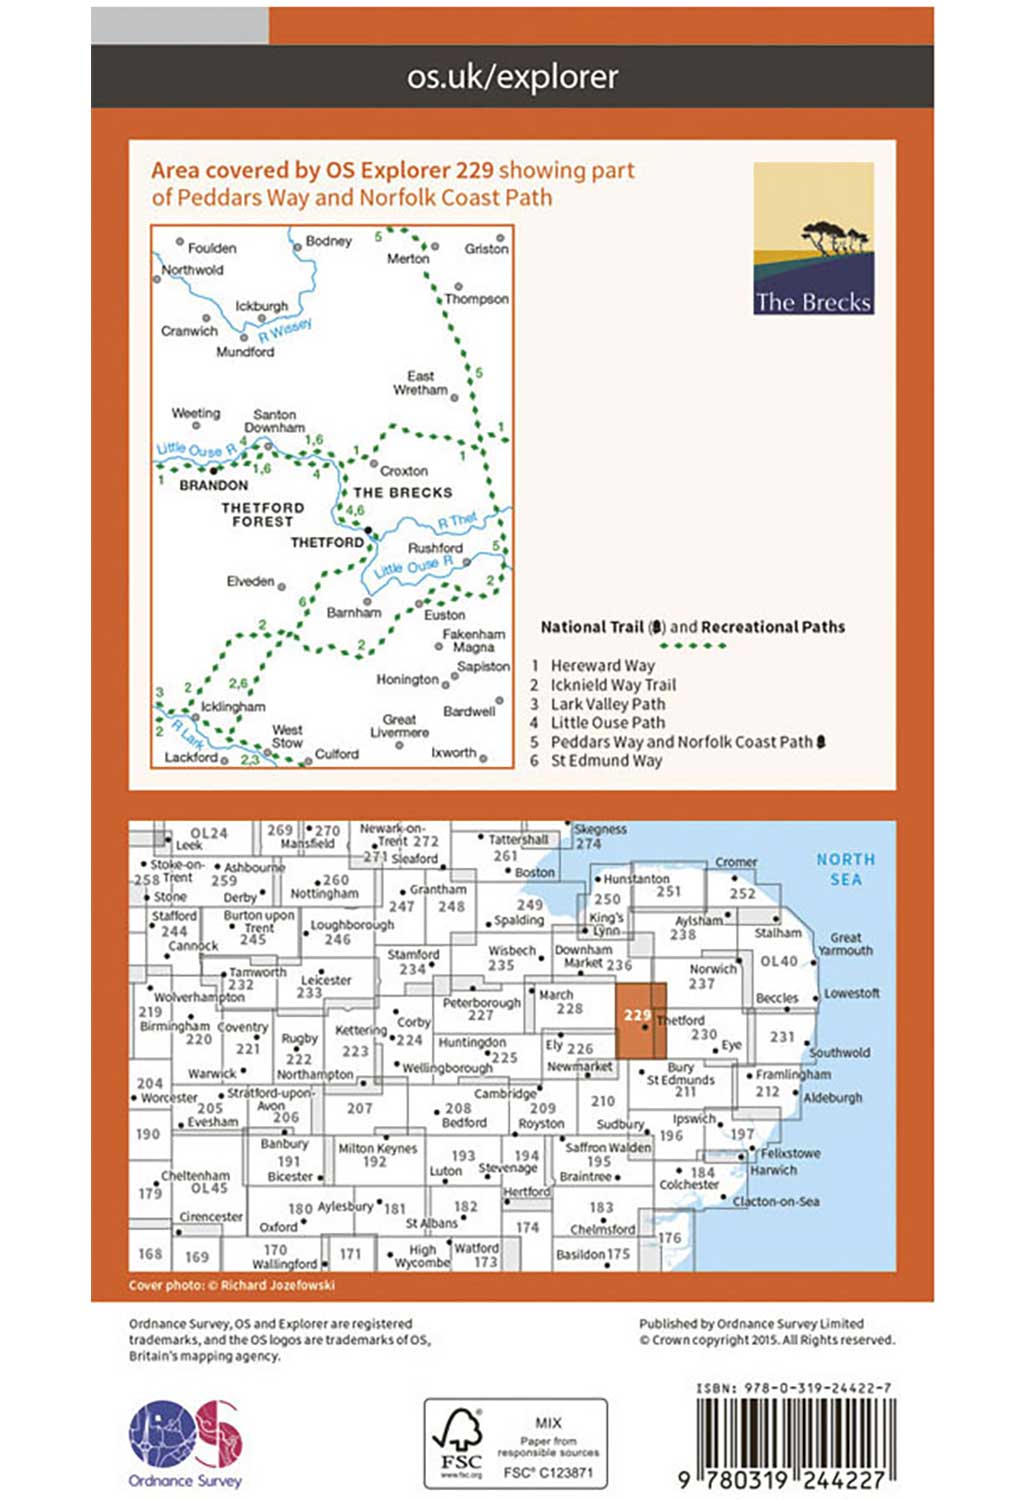 Ordnance Survey Thetford Forest in The Brecks, Thetford & Brandon - OS Explorer 229 Map